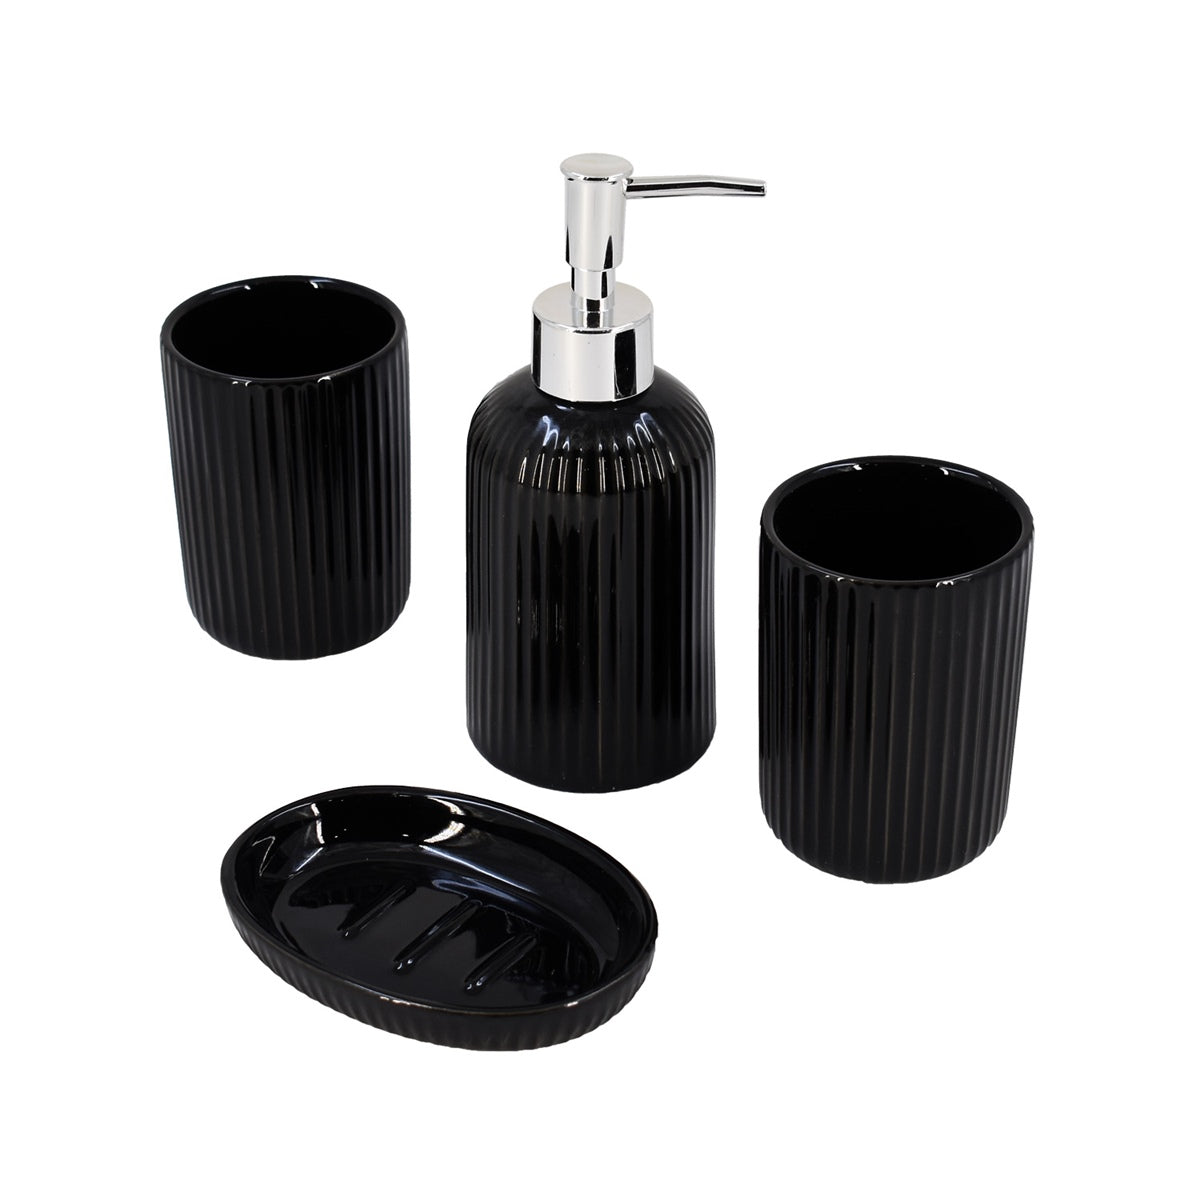 Ceramic Bathroom Accessories Set of 4 Bath Set with Soap Dispenser (8230)